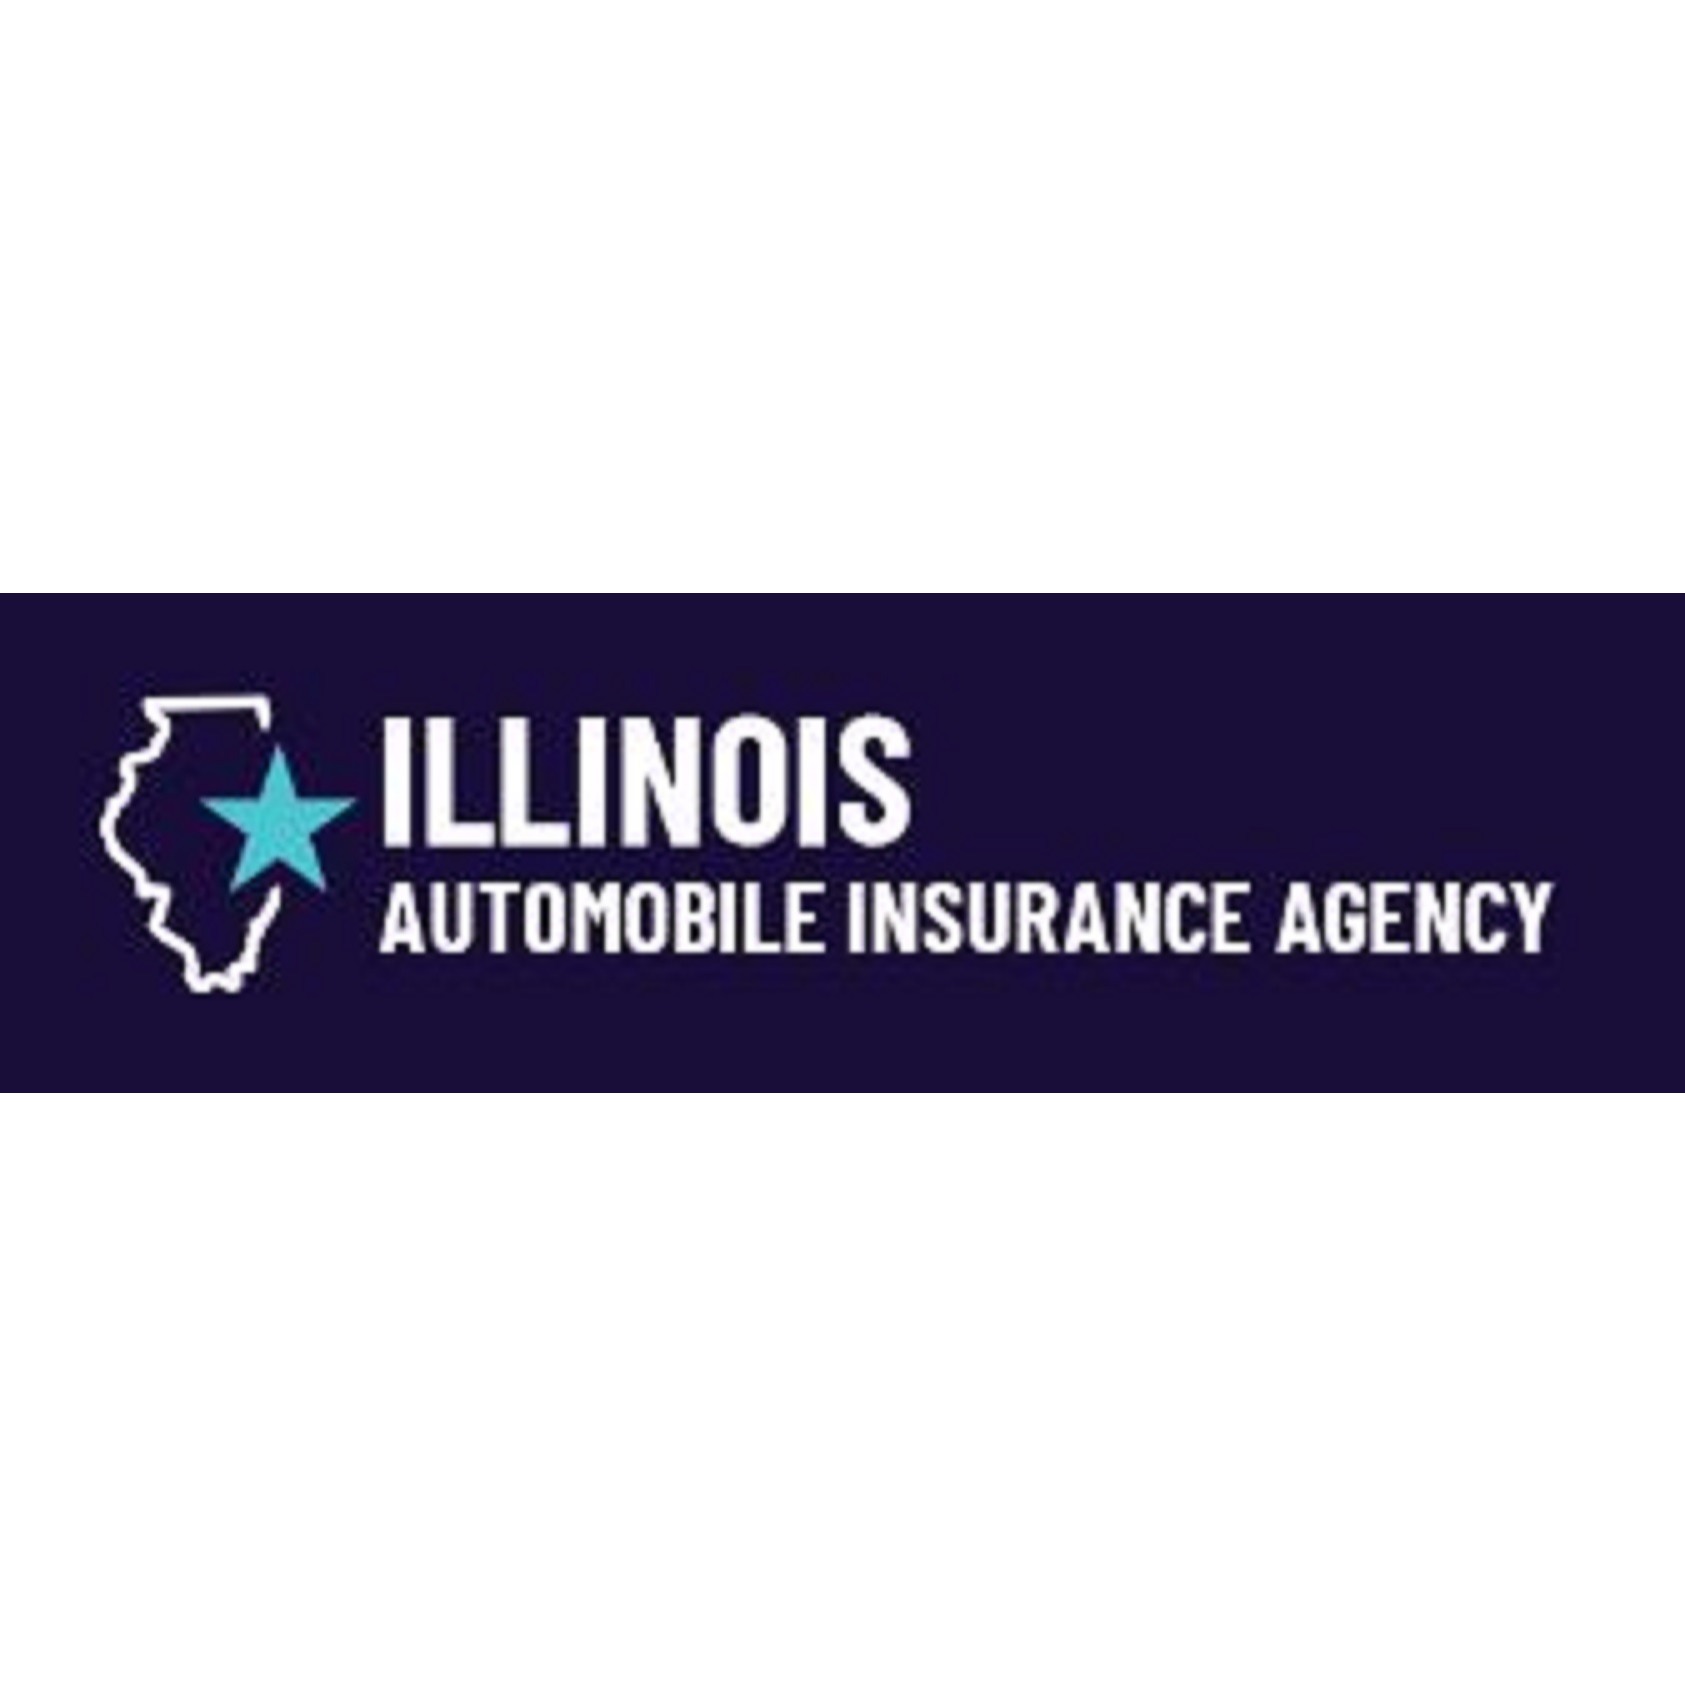 Illinois Automobile Insurance Agency - Chicago, IL 60629 - (773)838-1500 | ShowMeLocal.com